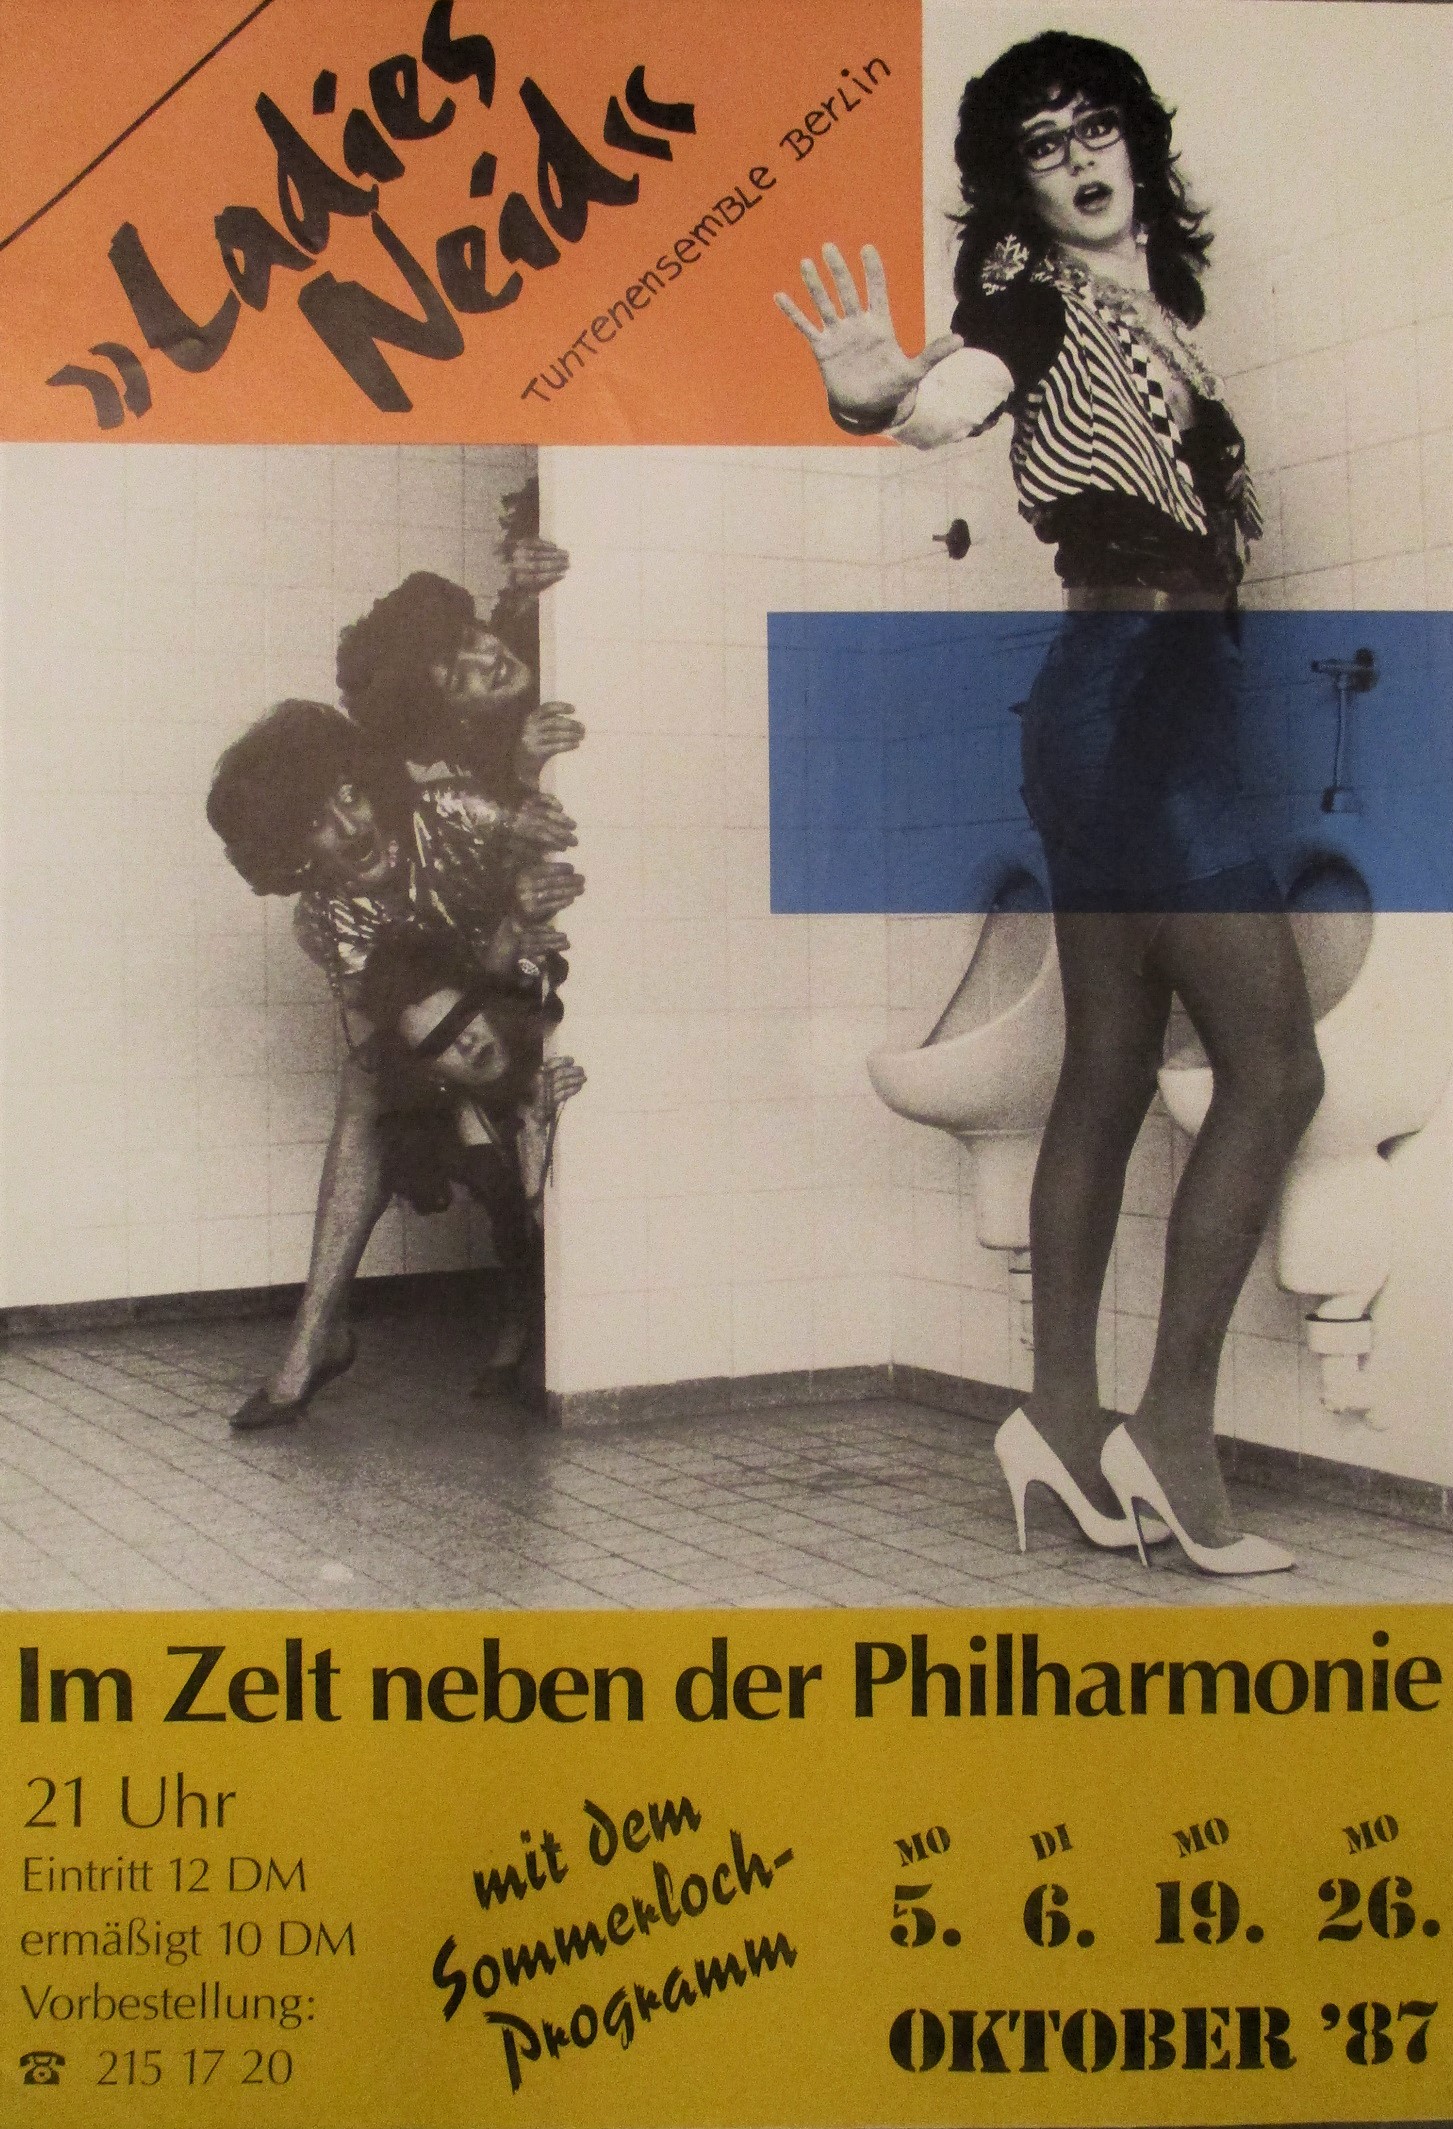 Performance announcement, "Ladies Neid", Tuntenensemble Berlin, March April May 1987, at Schwuz, Hasenheide 54, Berlin.